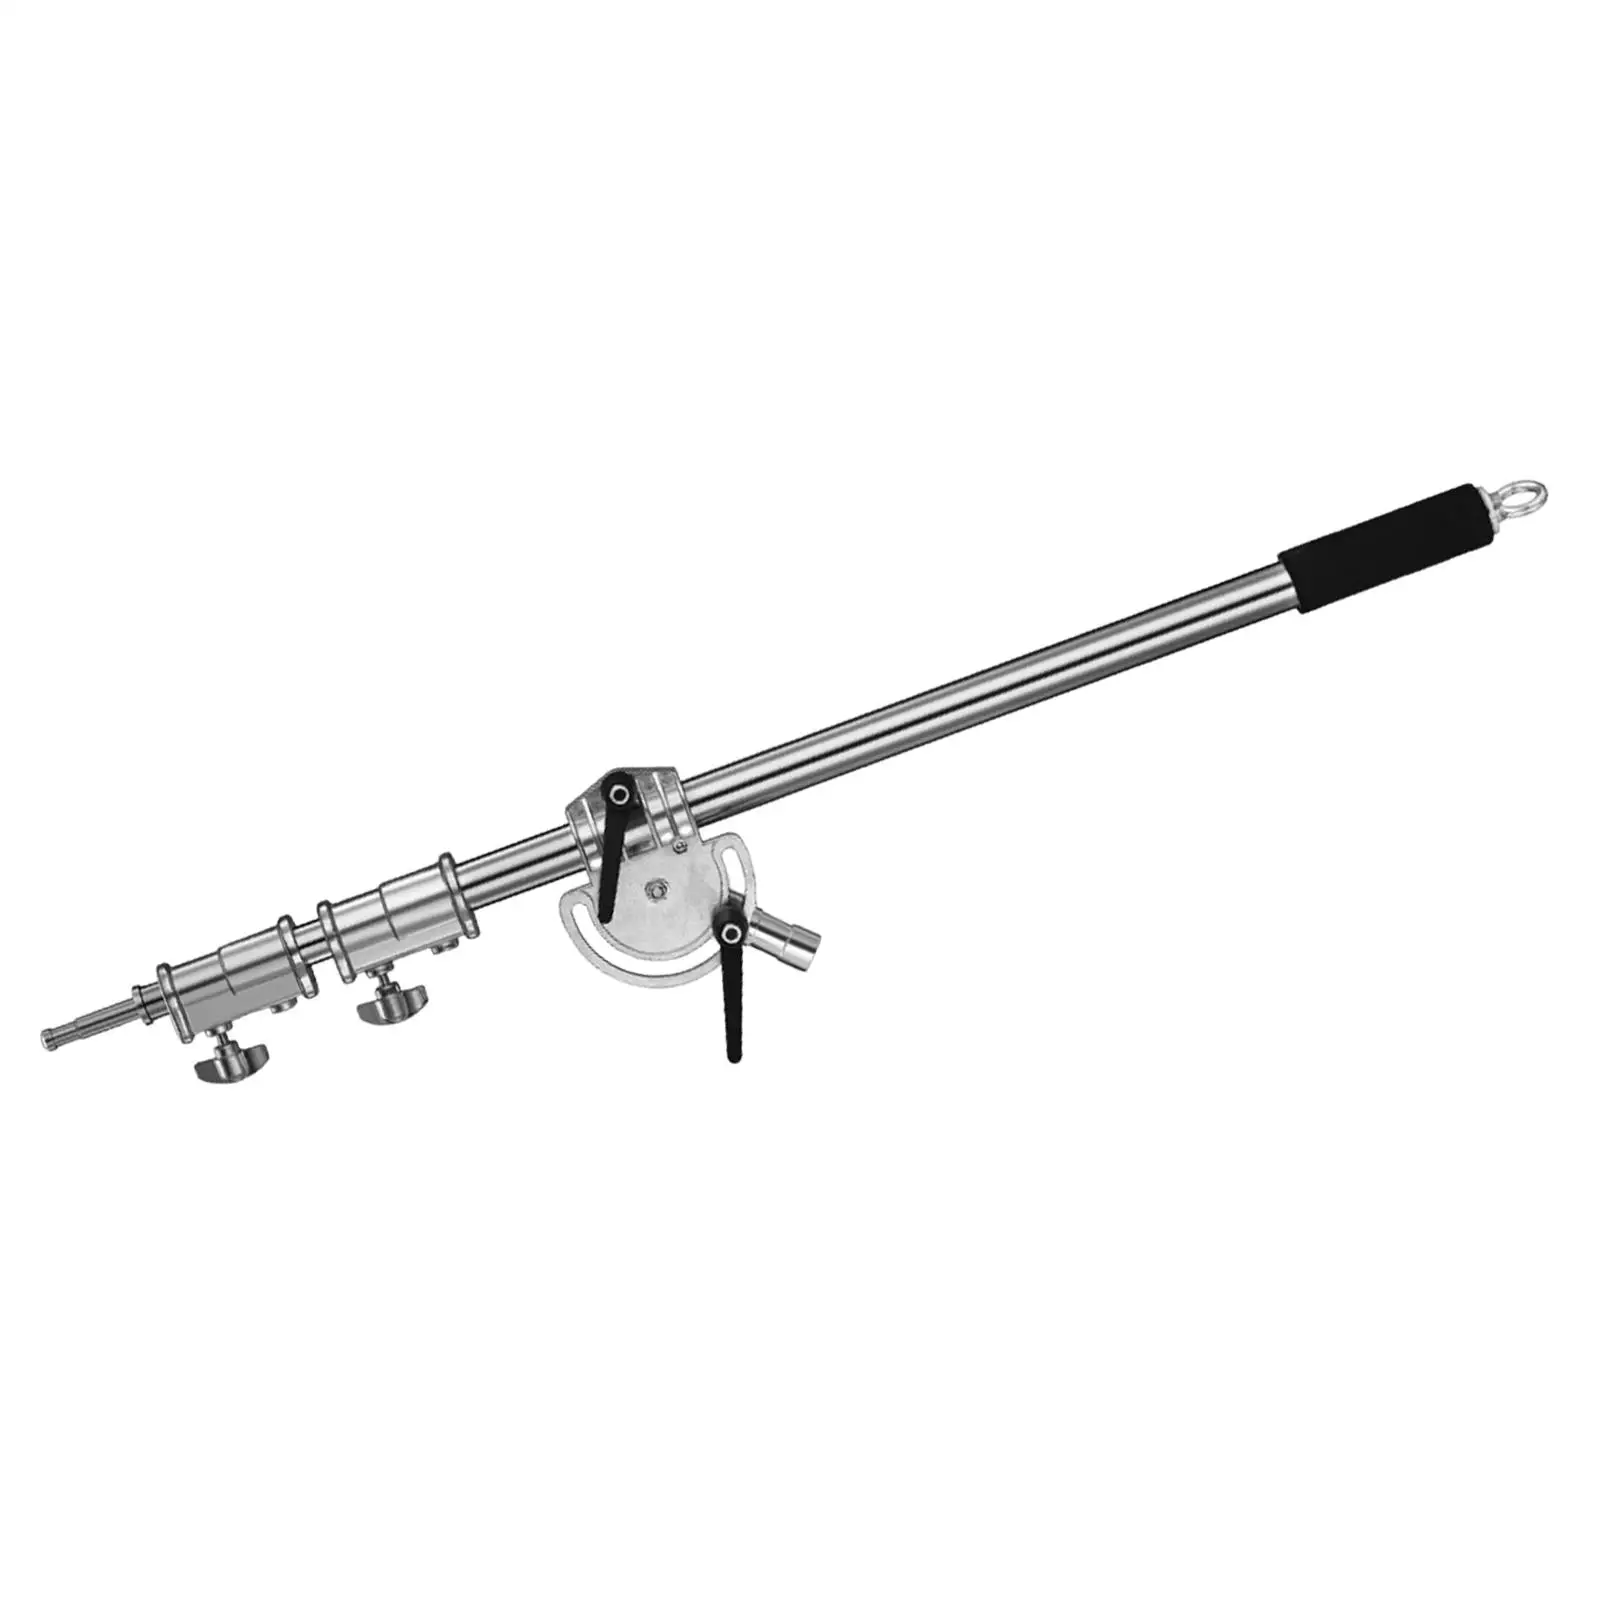 Extendable Photo Studio Boom Arm Stud Adapter Light Stand Length Adjustable Cross Arm Bar for Hair Lights Reflector Strobe